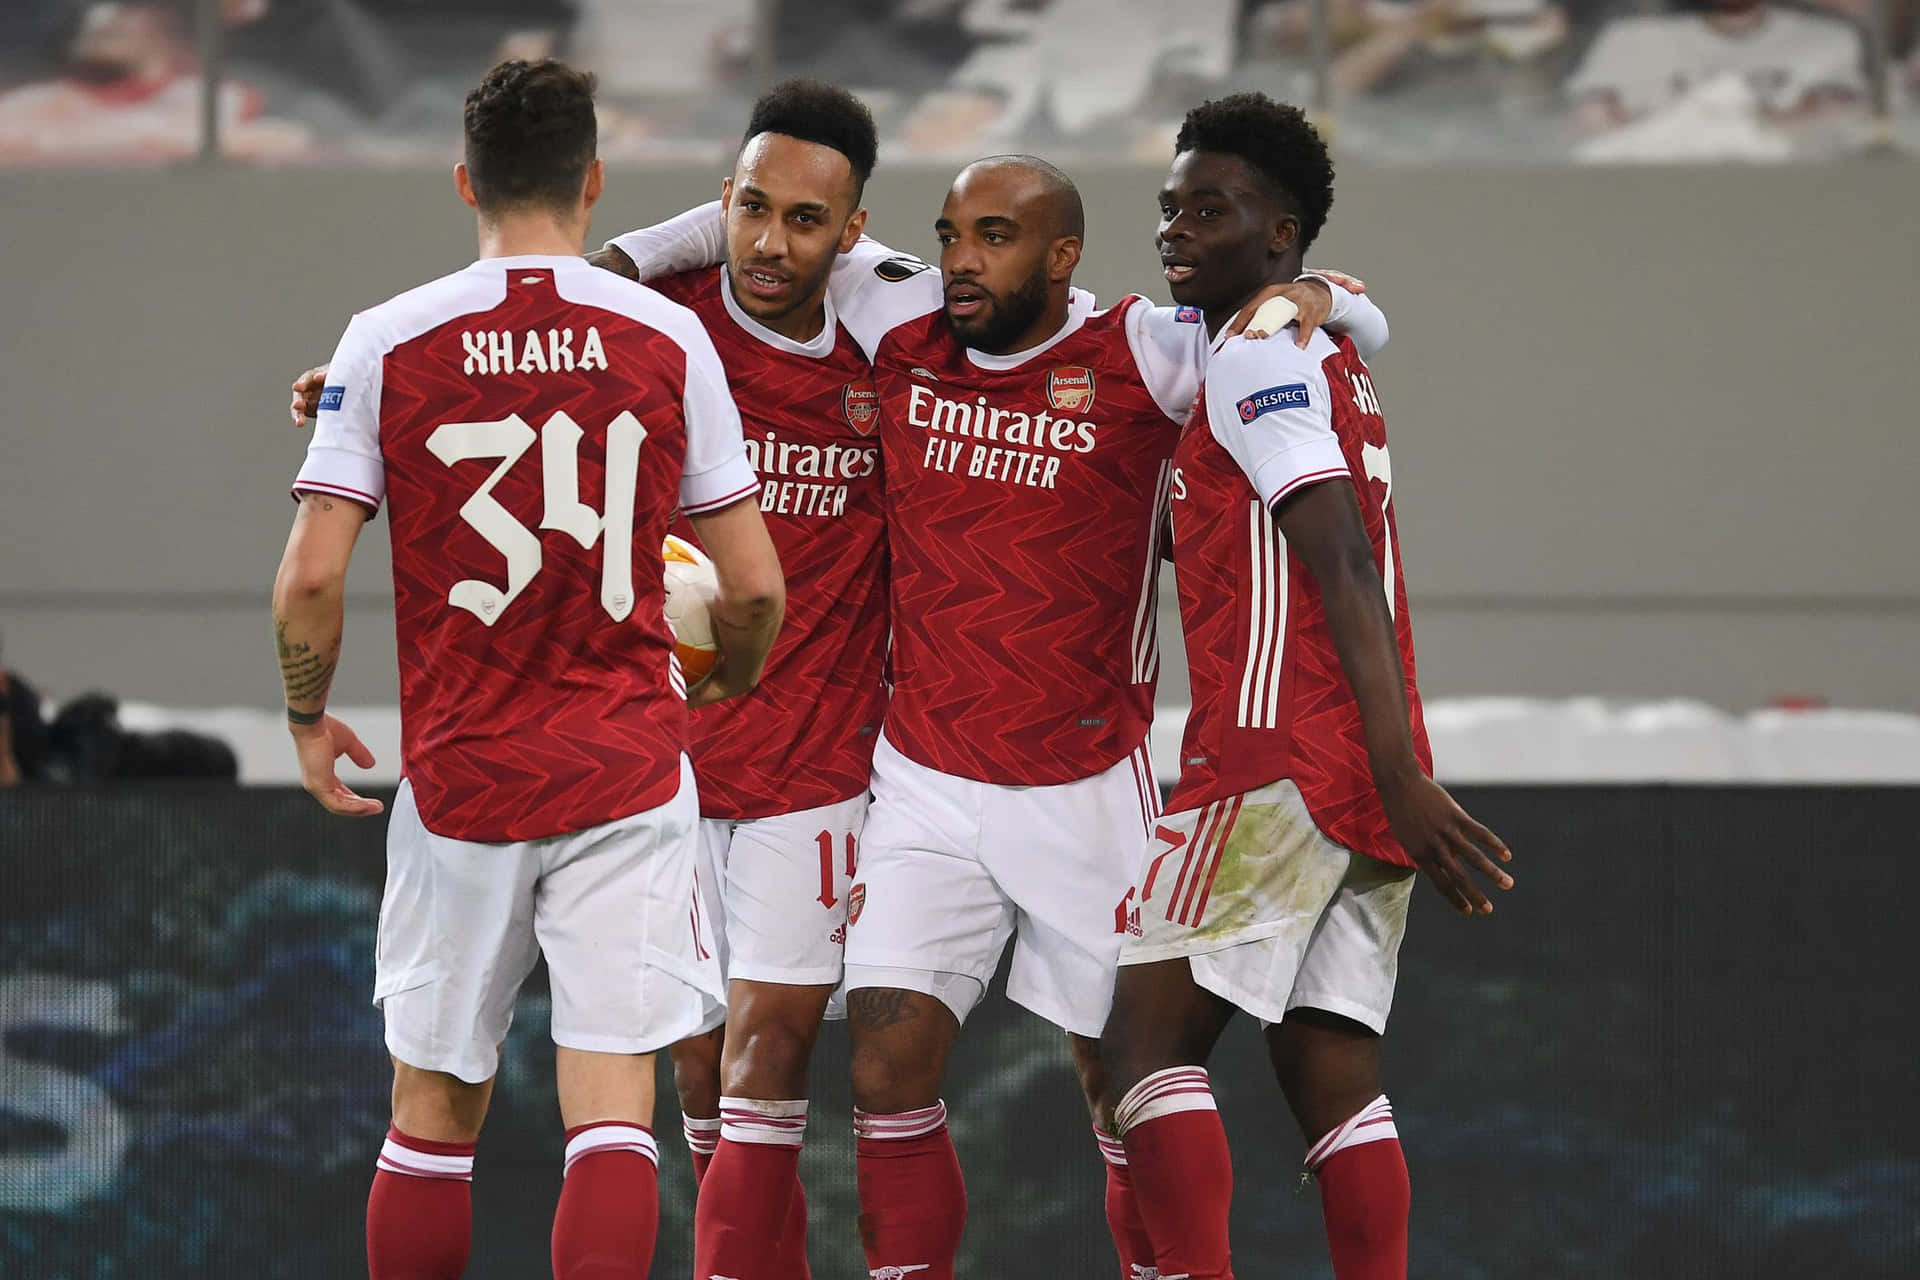 Arsenal players celebrate a goal at Emirates Stadium